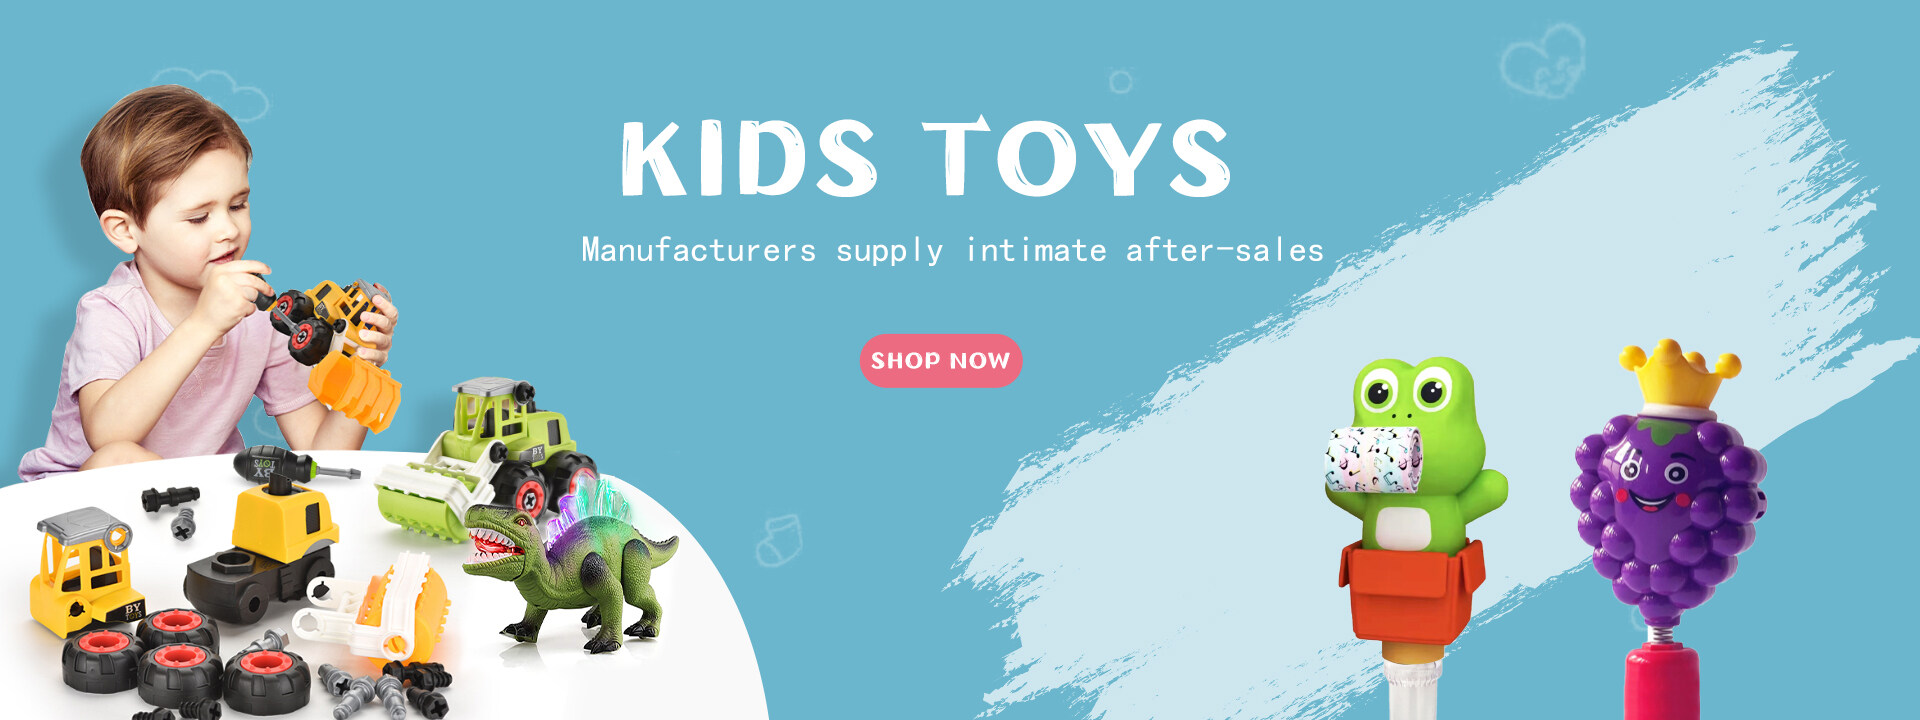 kids toys supplier, kids toys companies 